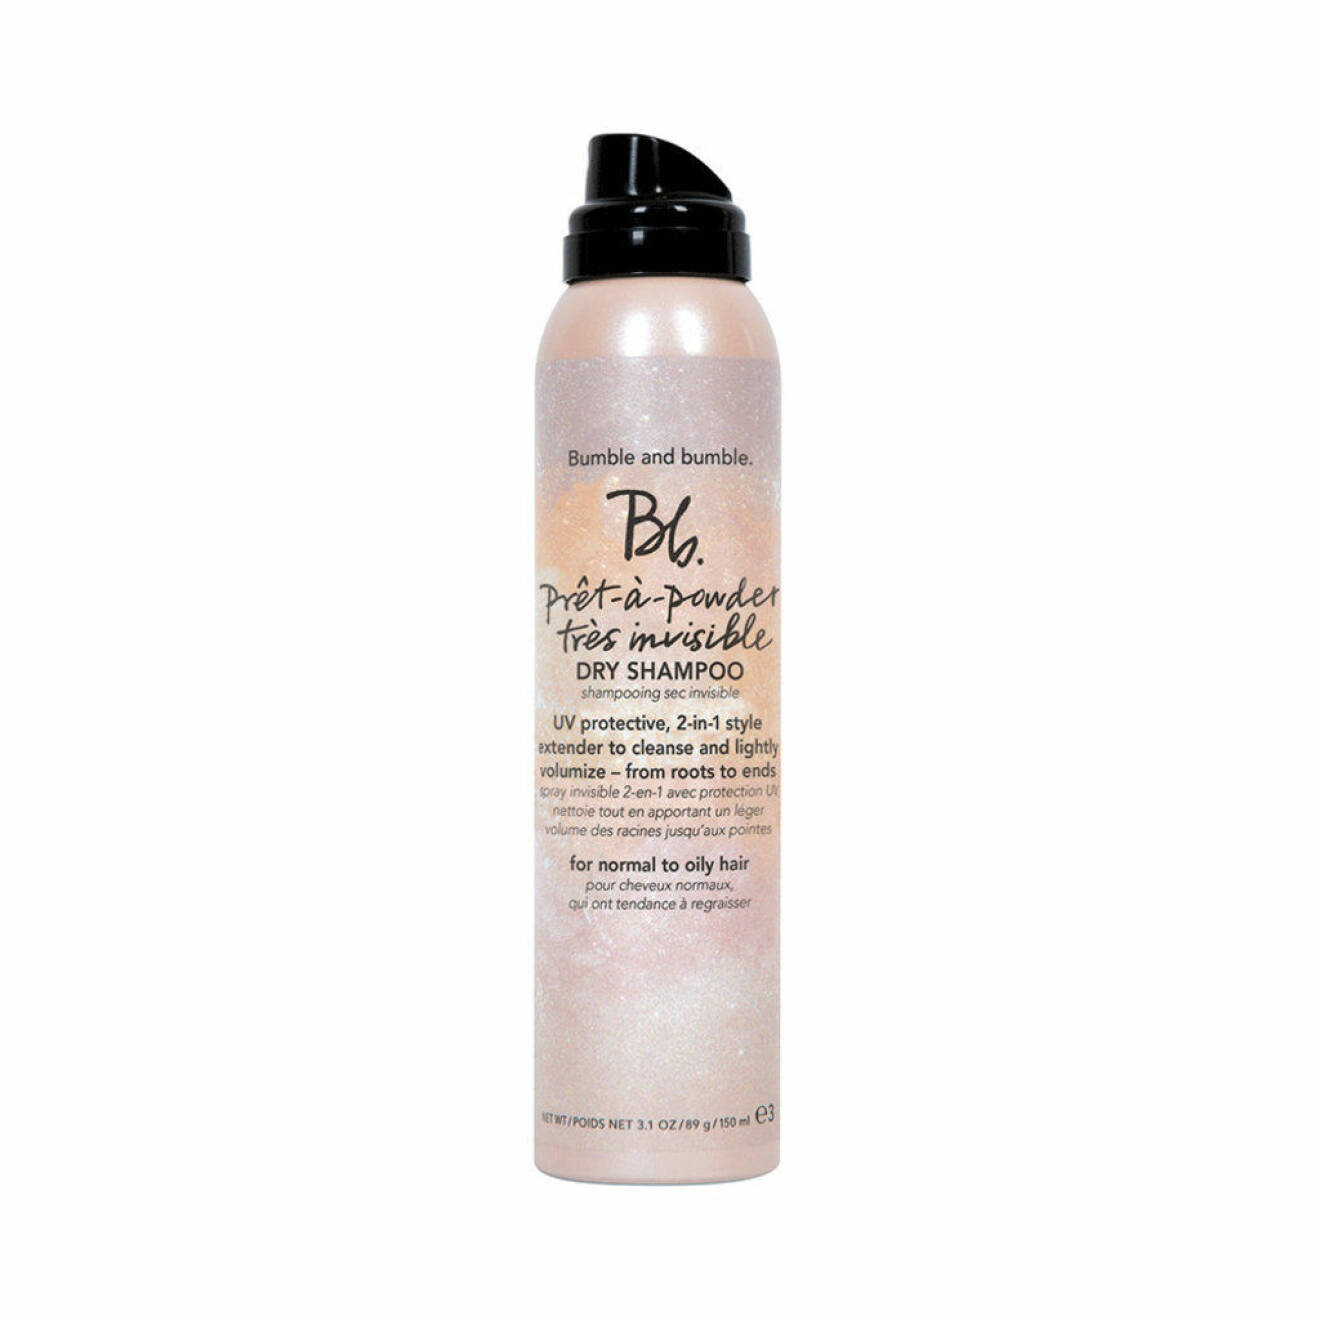 En bild på ett torrshampo, produkten Bumble & Bumble – Bb.Prêt-à-powder Tres Invisible Dry Shampoo.